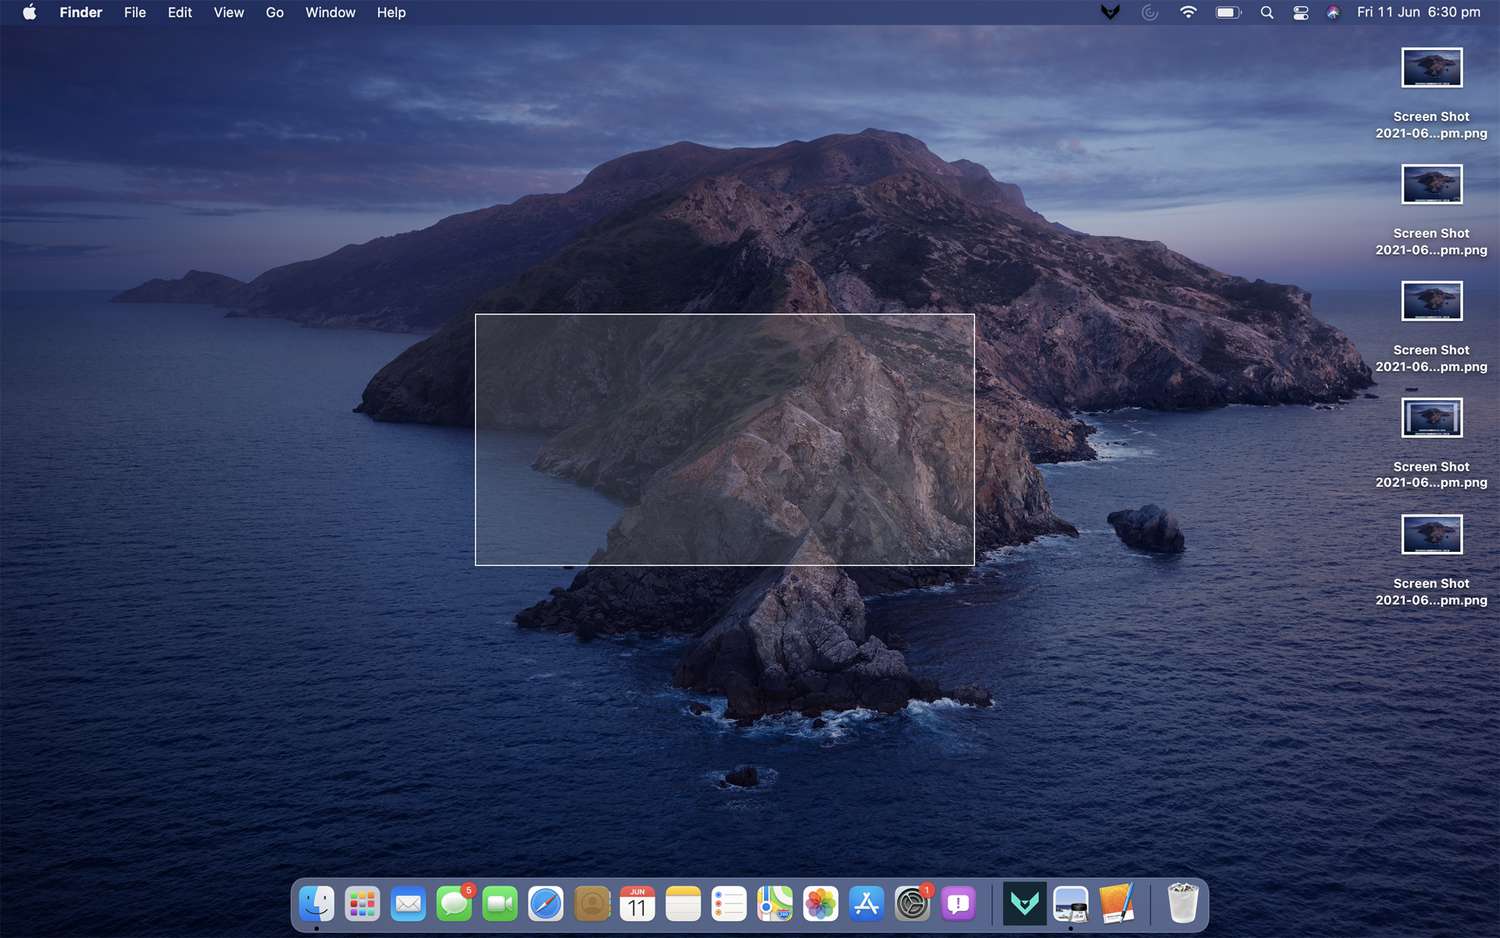 How to Take a Screenshot on Mac?